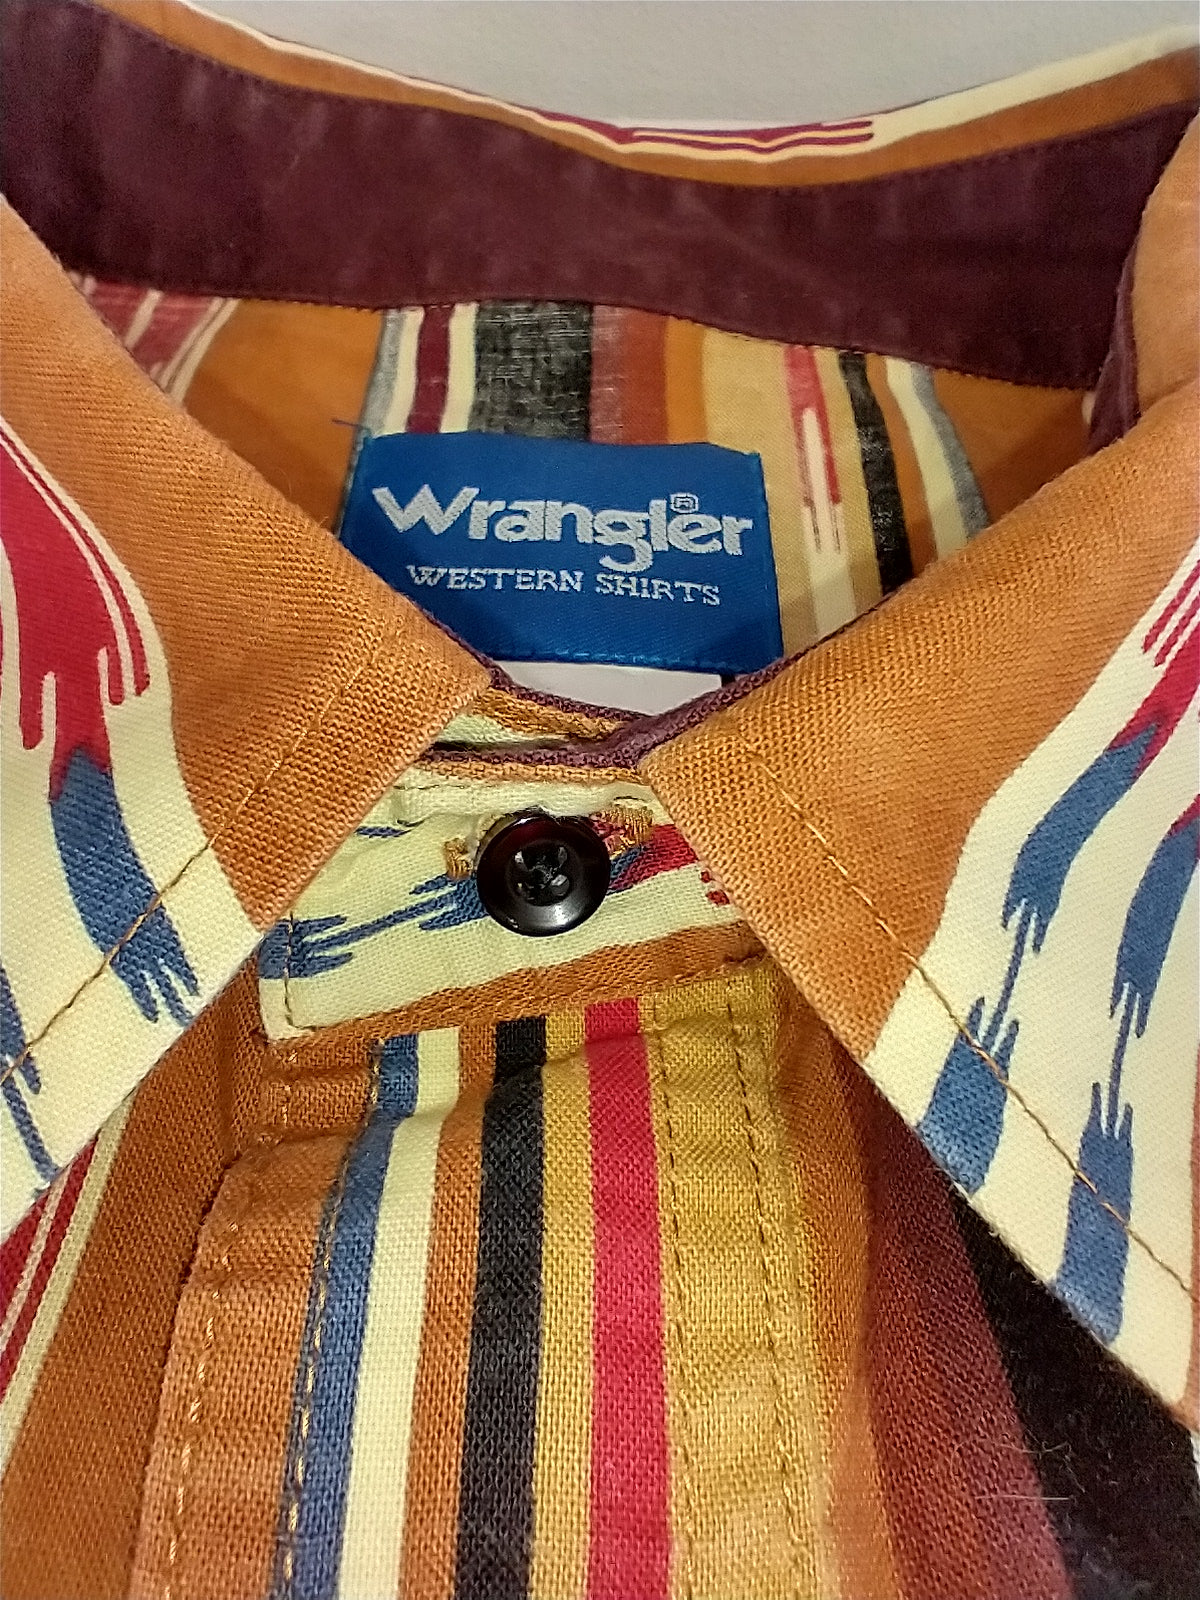 Wrangler Vintage Shirts